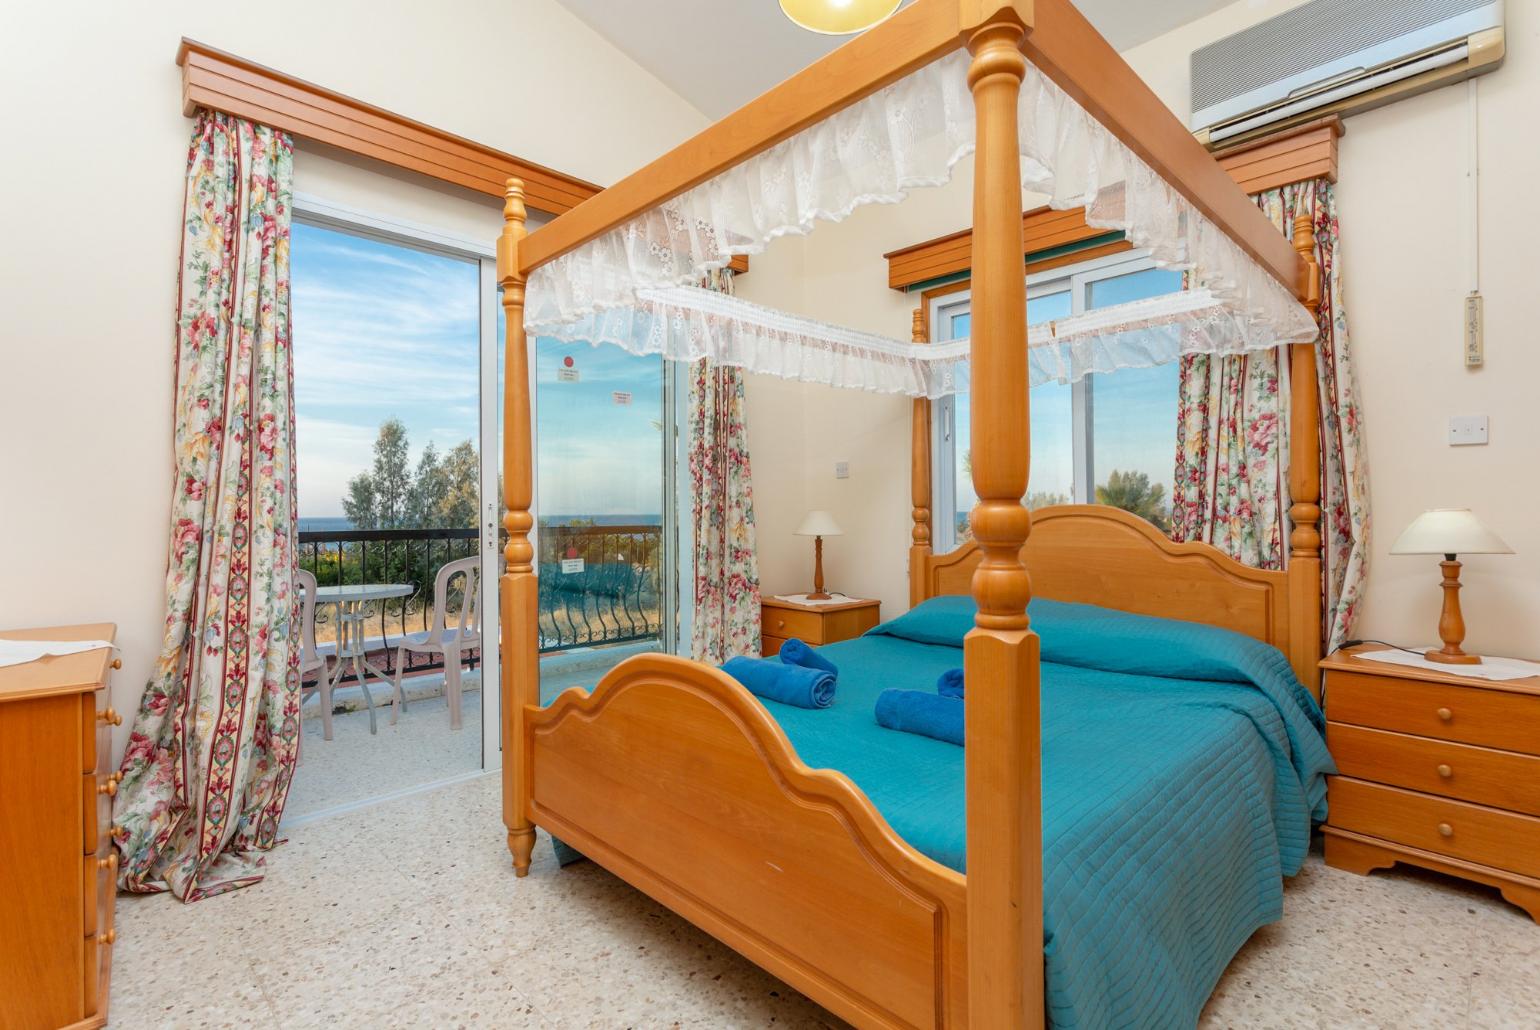 Double bedroom with en suite bathroom, A/C, and balcony with sea views